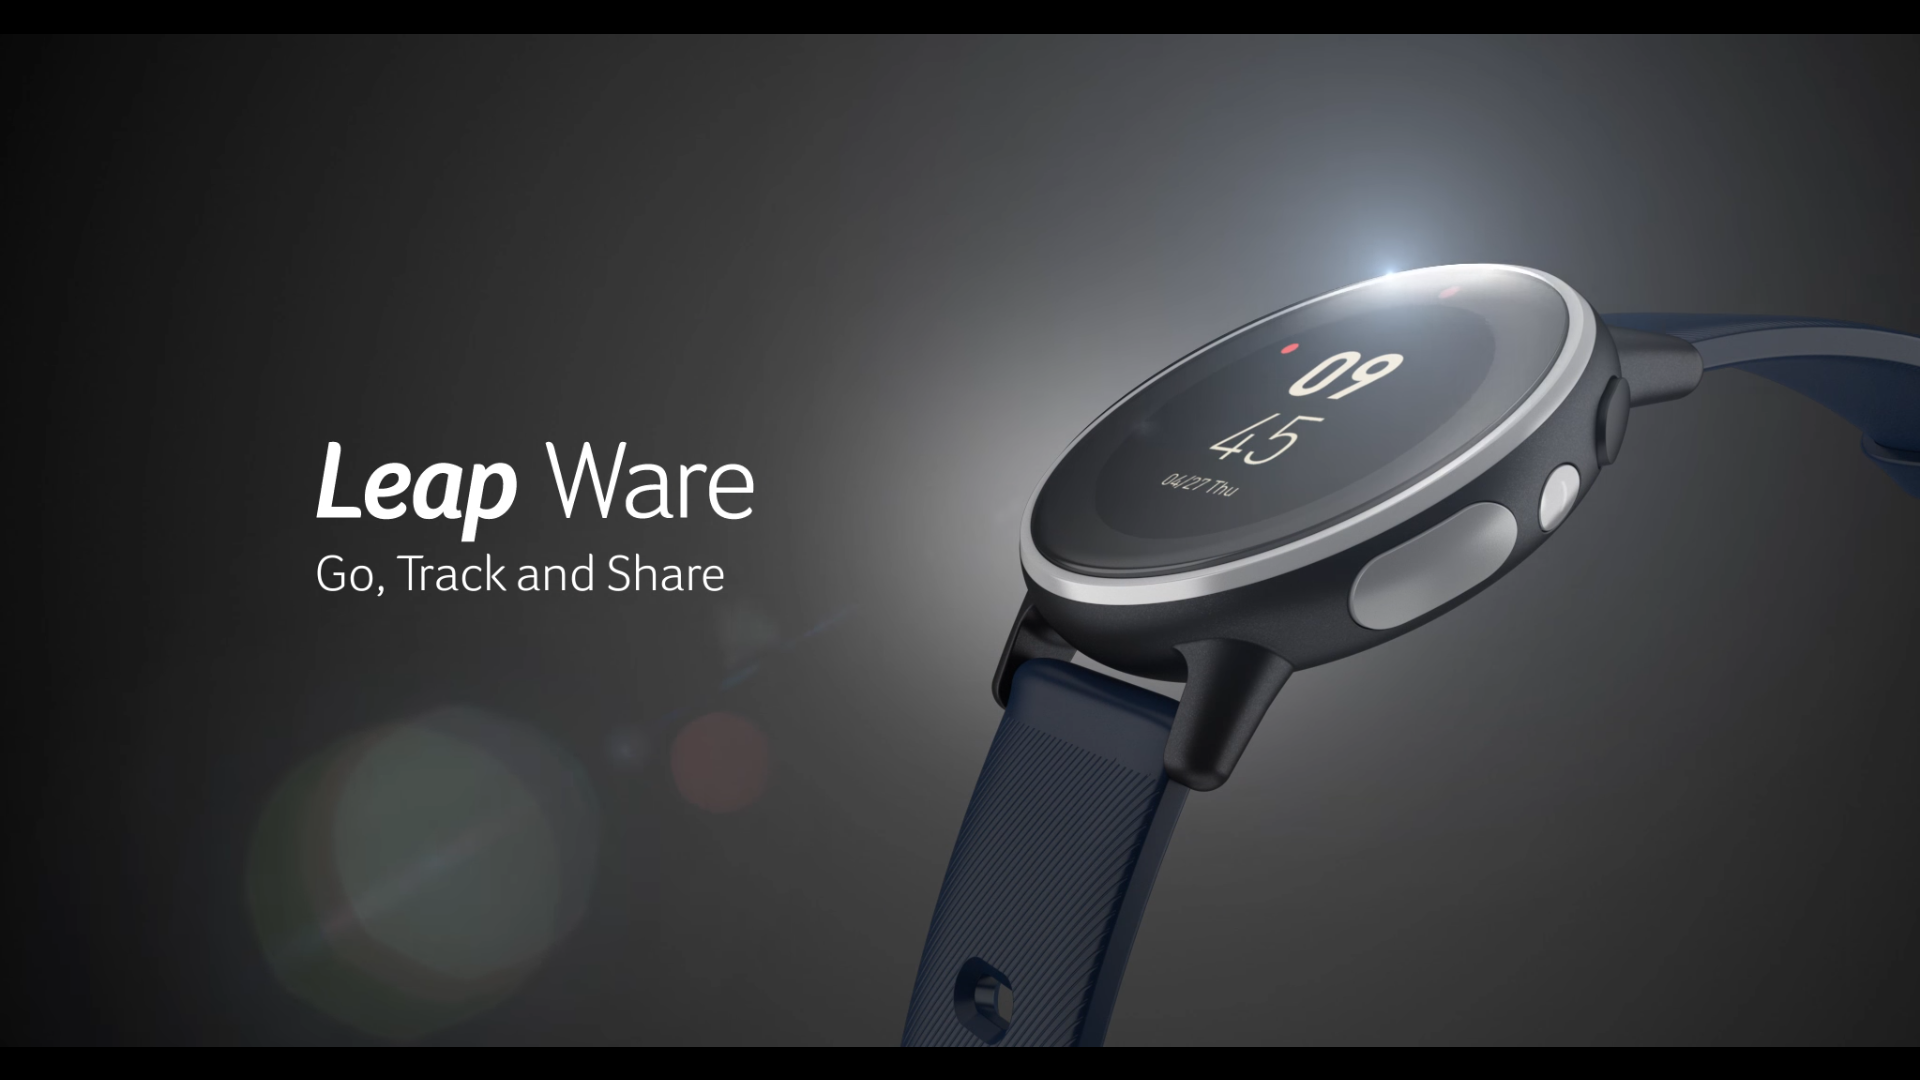 Acer เปิดตัว Leap Ware สมาร์ทวอชแนว Fitness Tracker พร้อมแบตเตอรี่ที่อยู่ได้ถึง 5 วัน